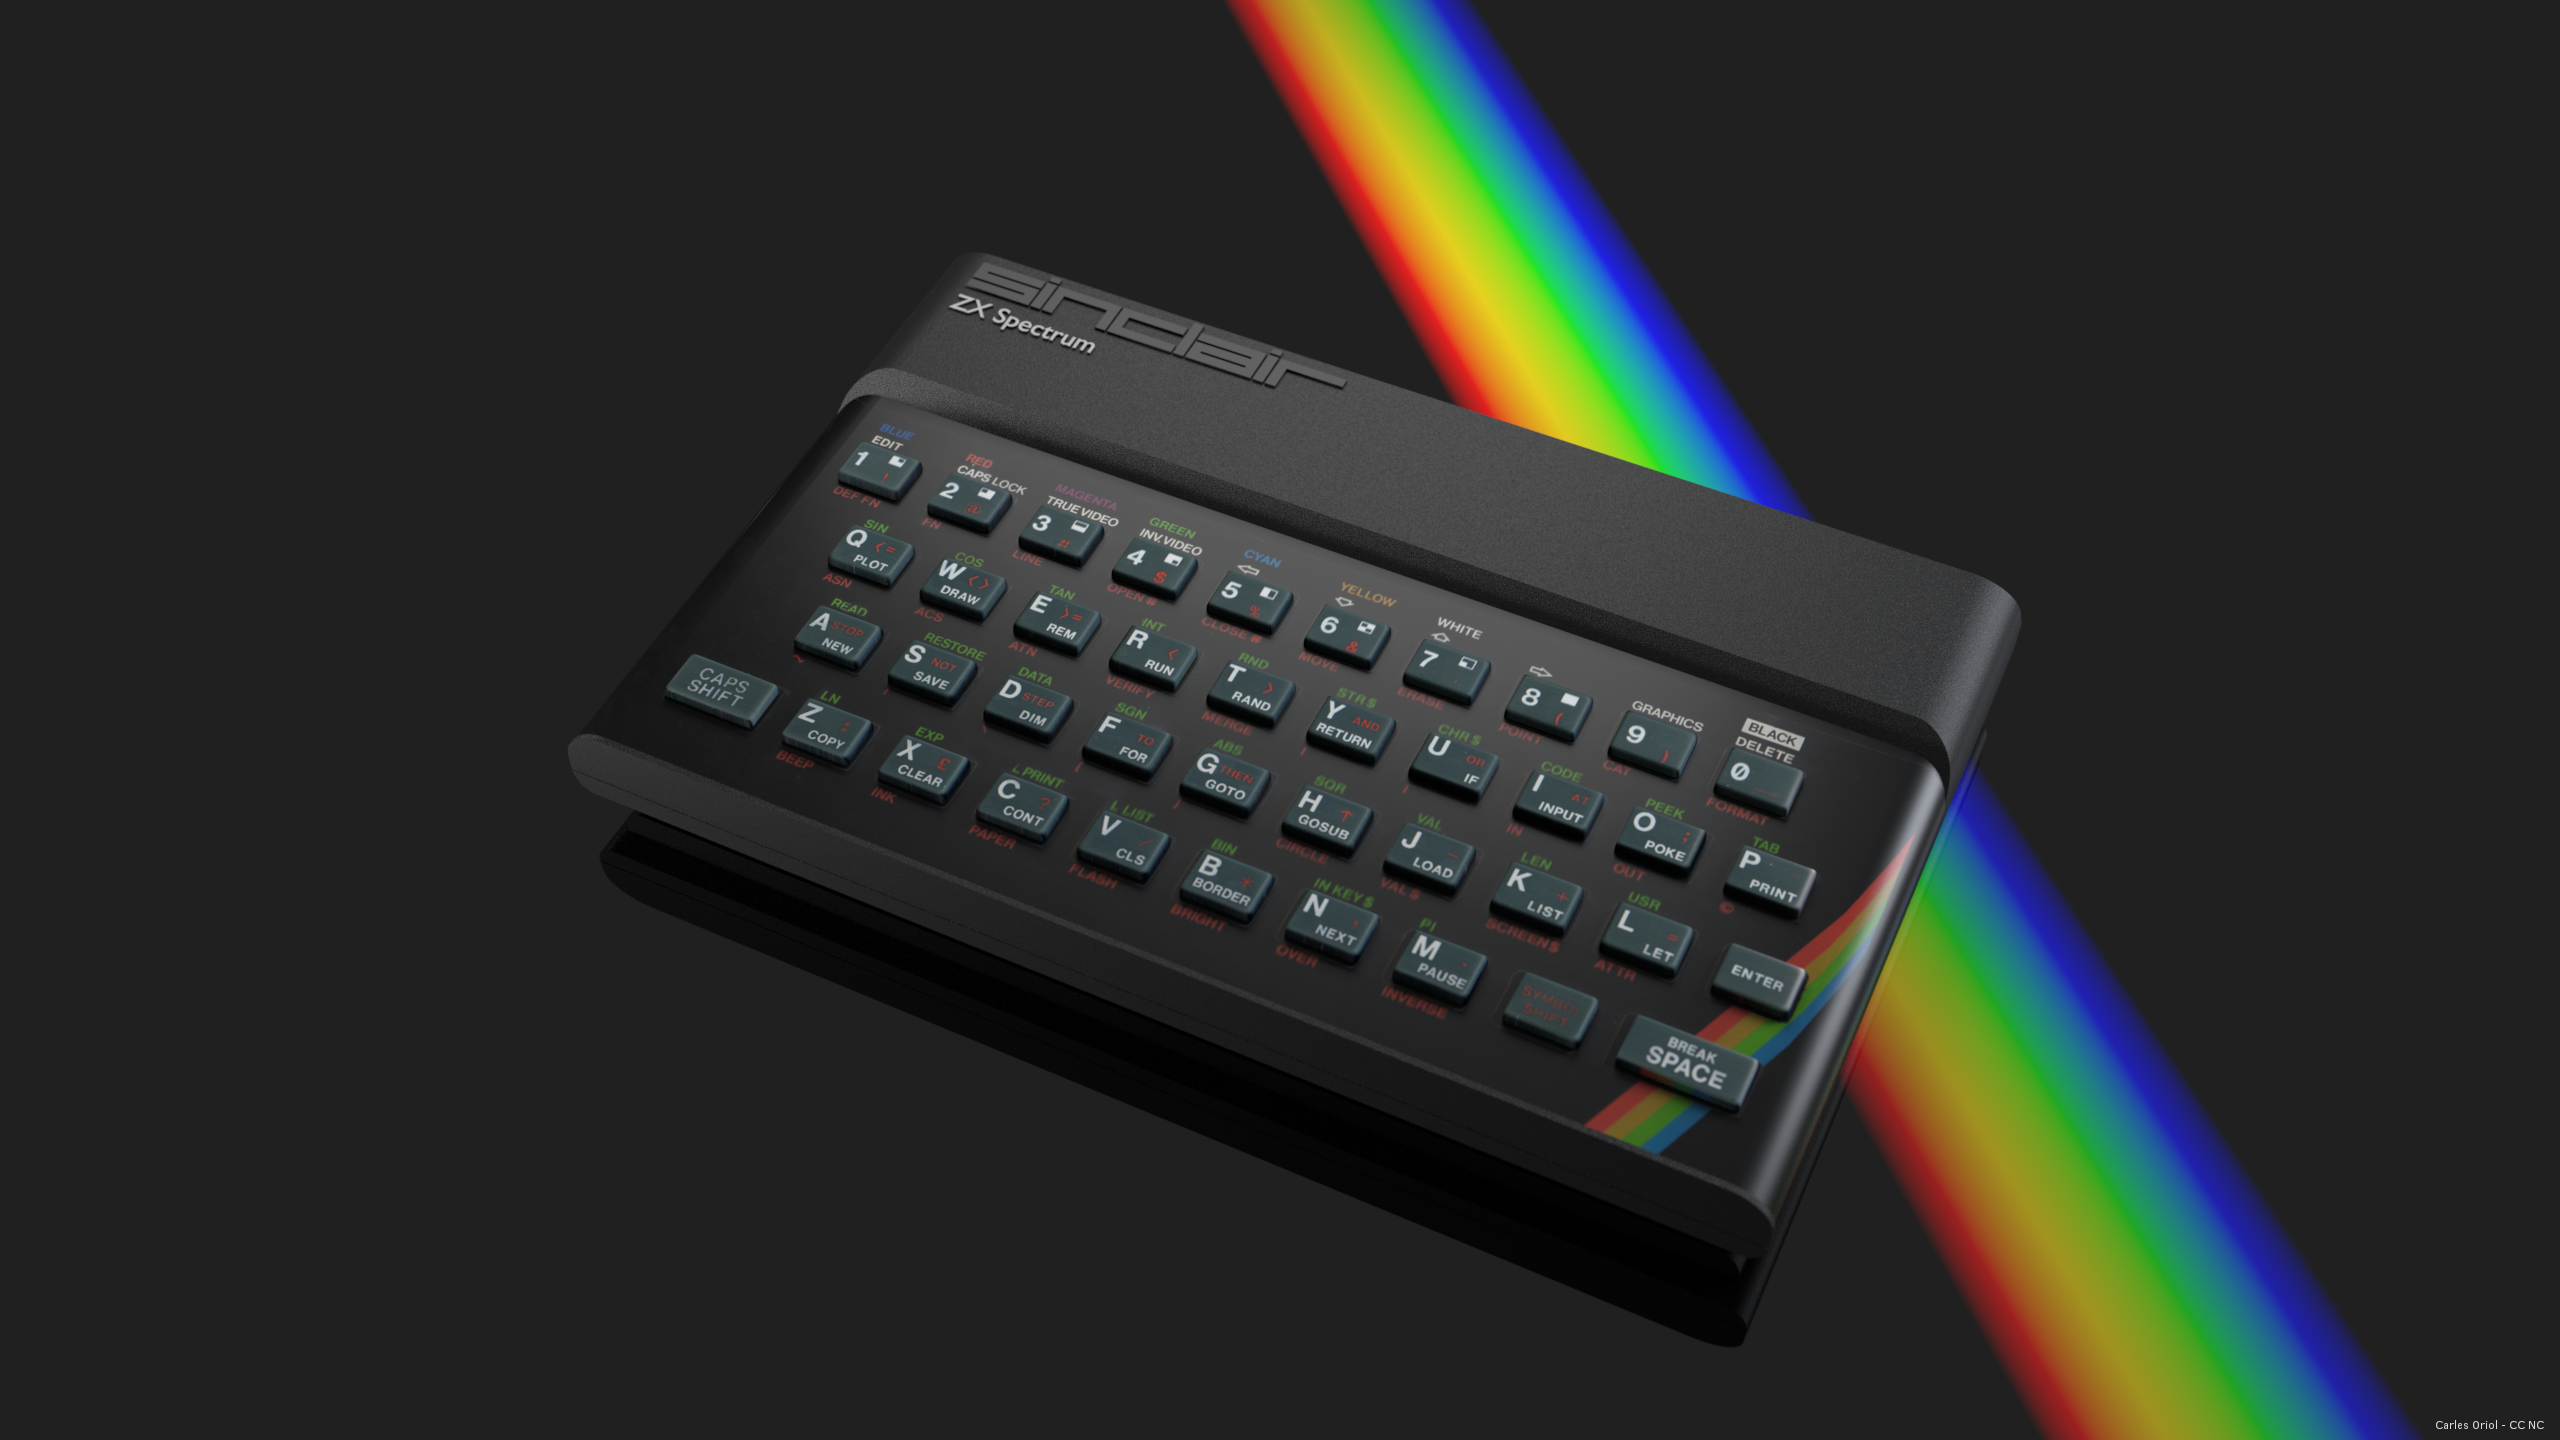 Zx Spectrum Keyboards Technology Wallpaper:2560x1440